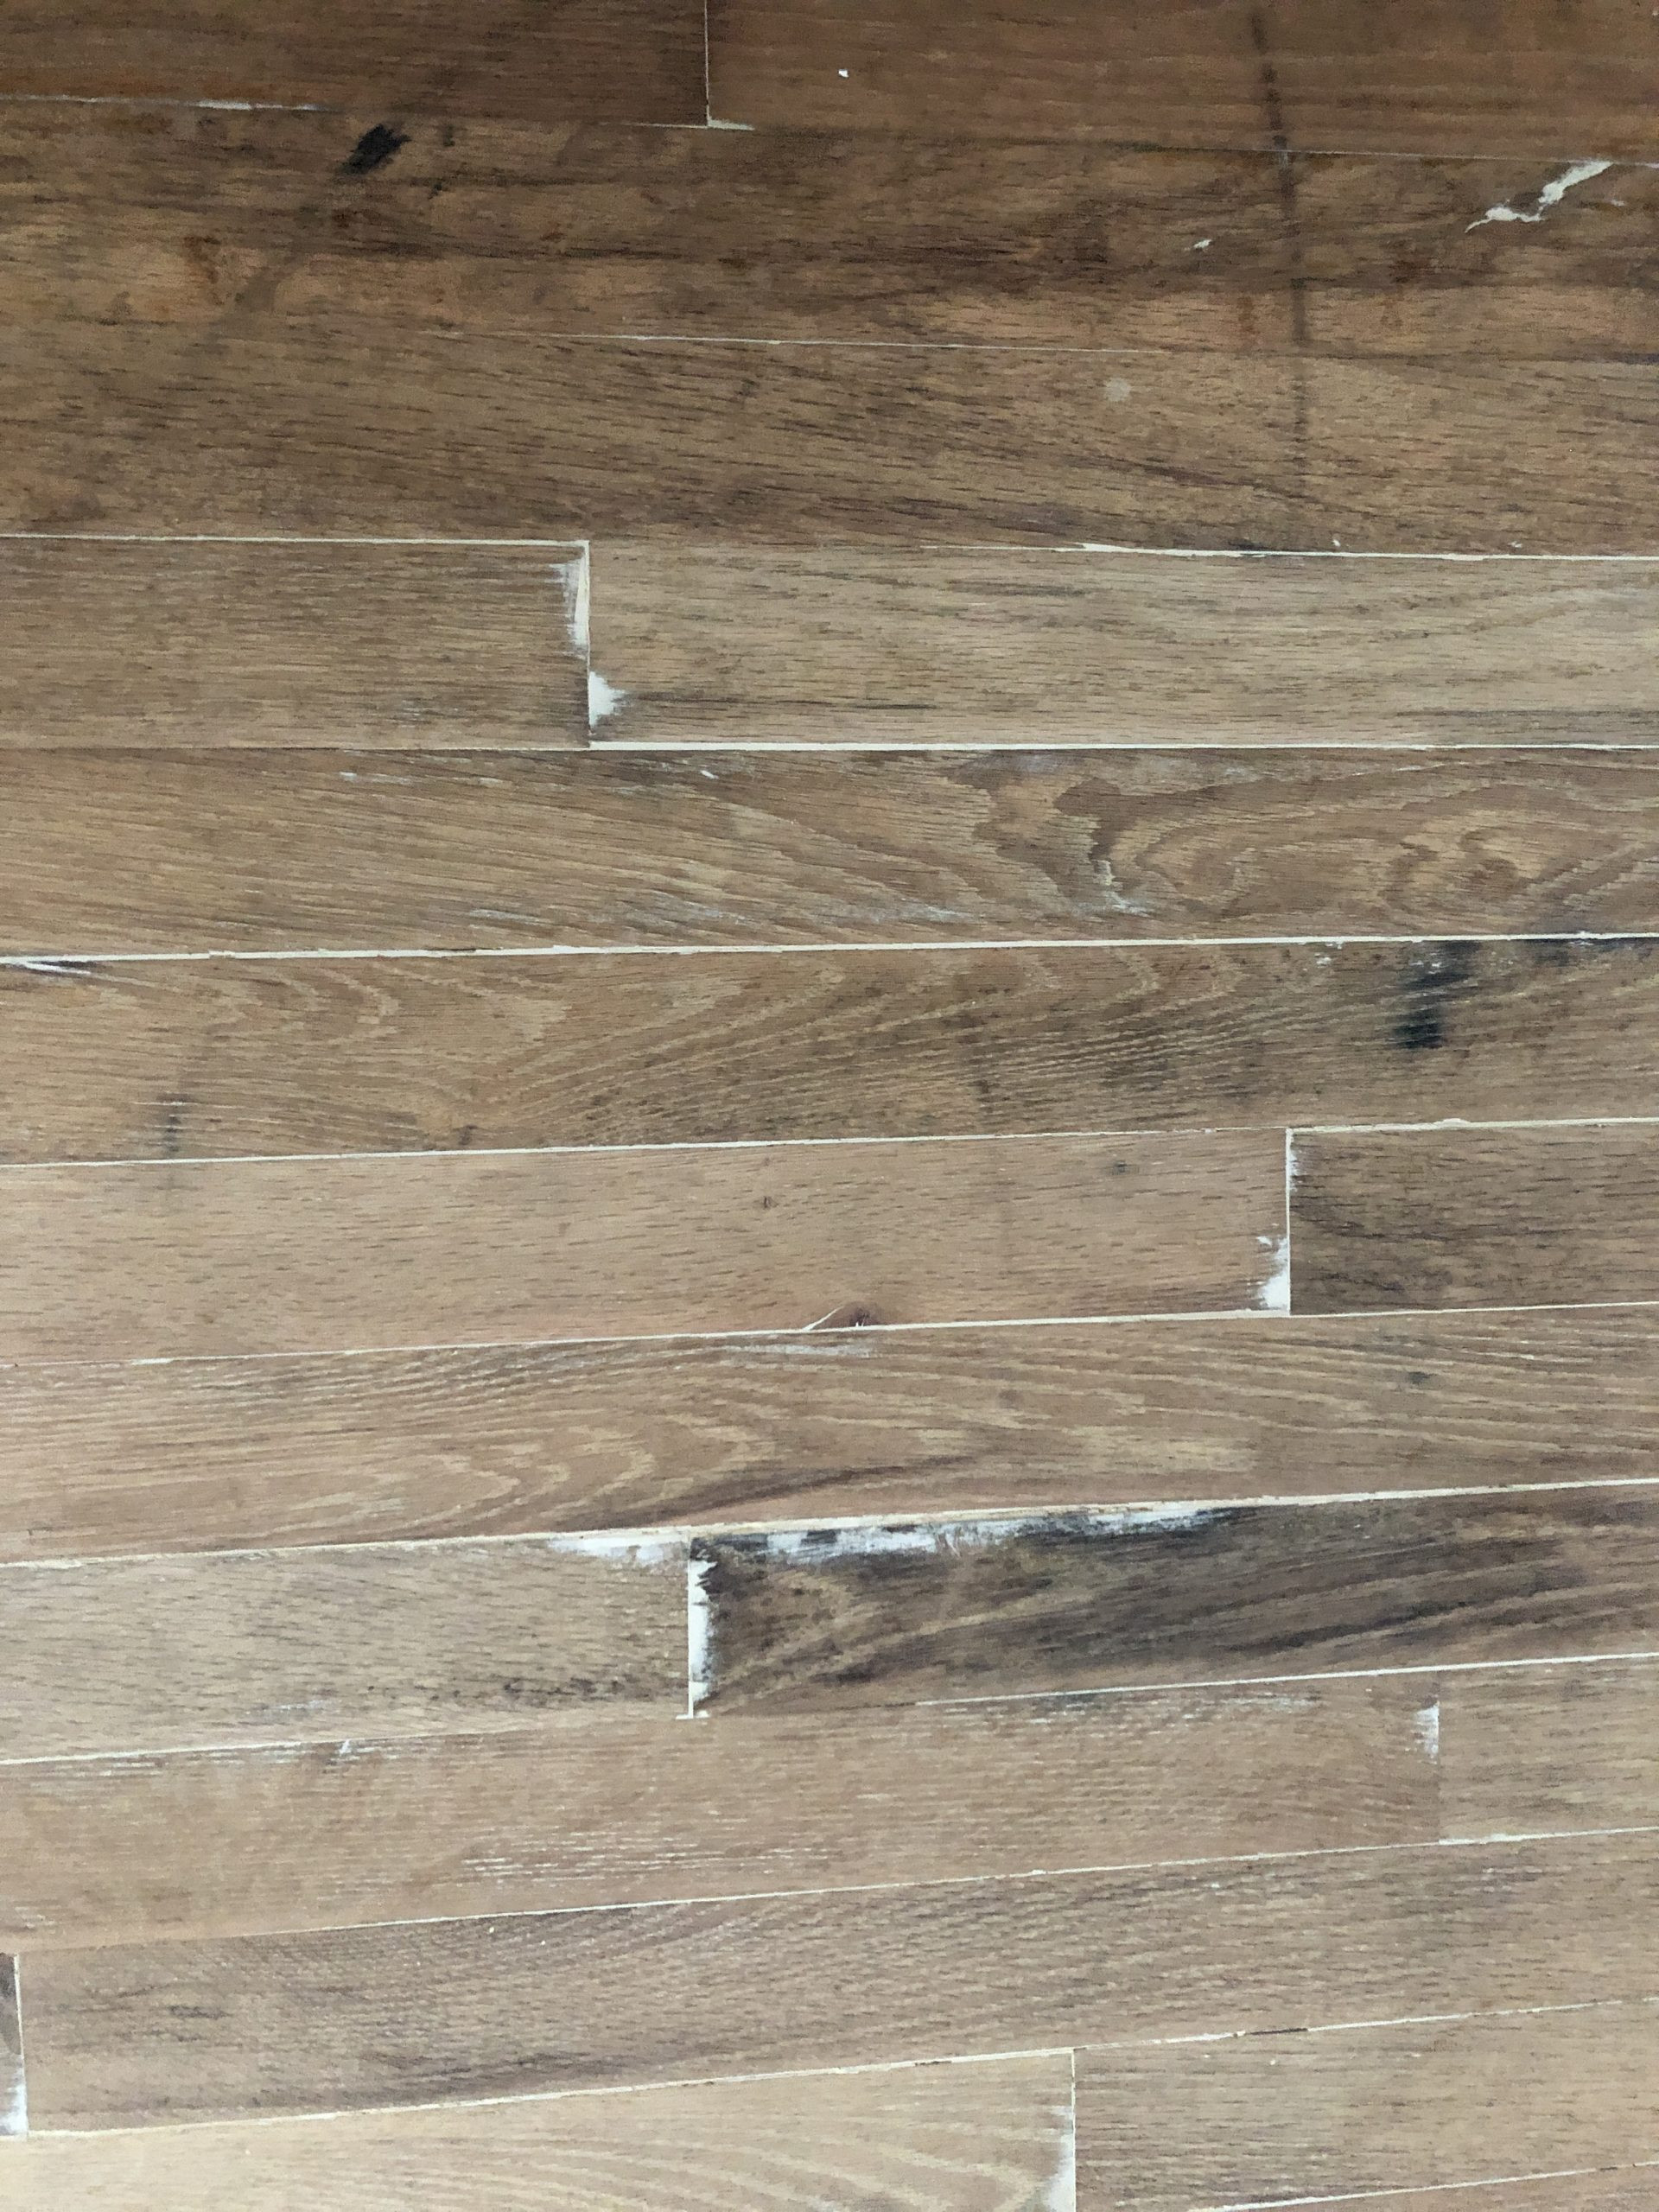 DIY Hardwood Floor Refinishing Beginners
 Frugal DIY Hardwood Floor Refinishing for Beginners